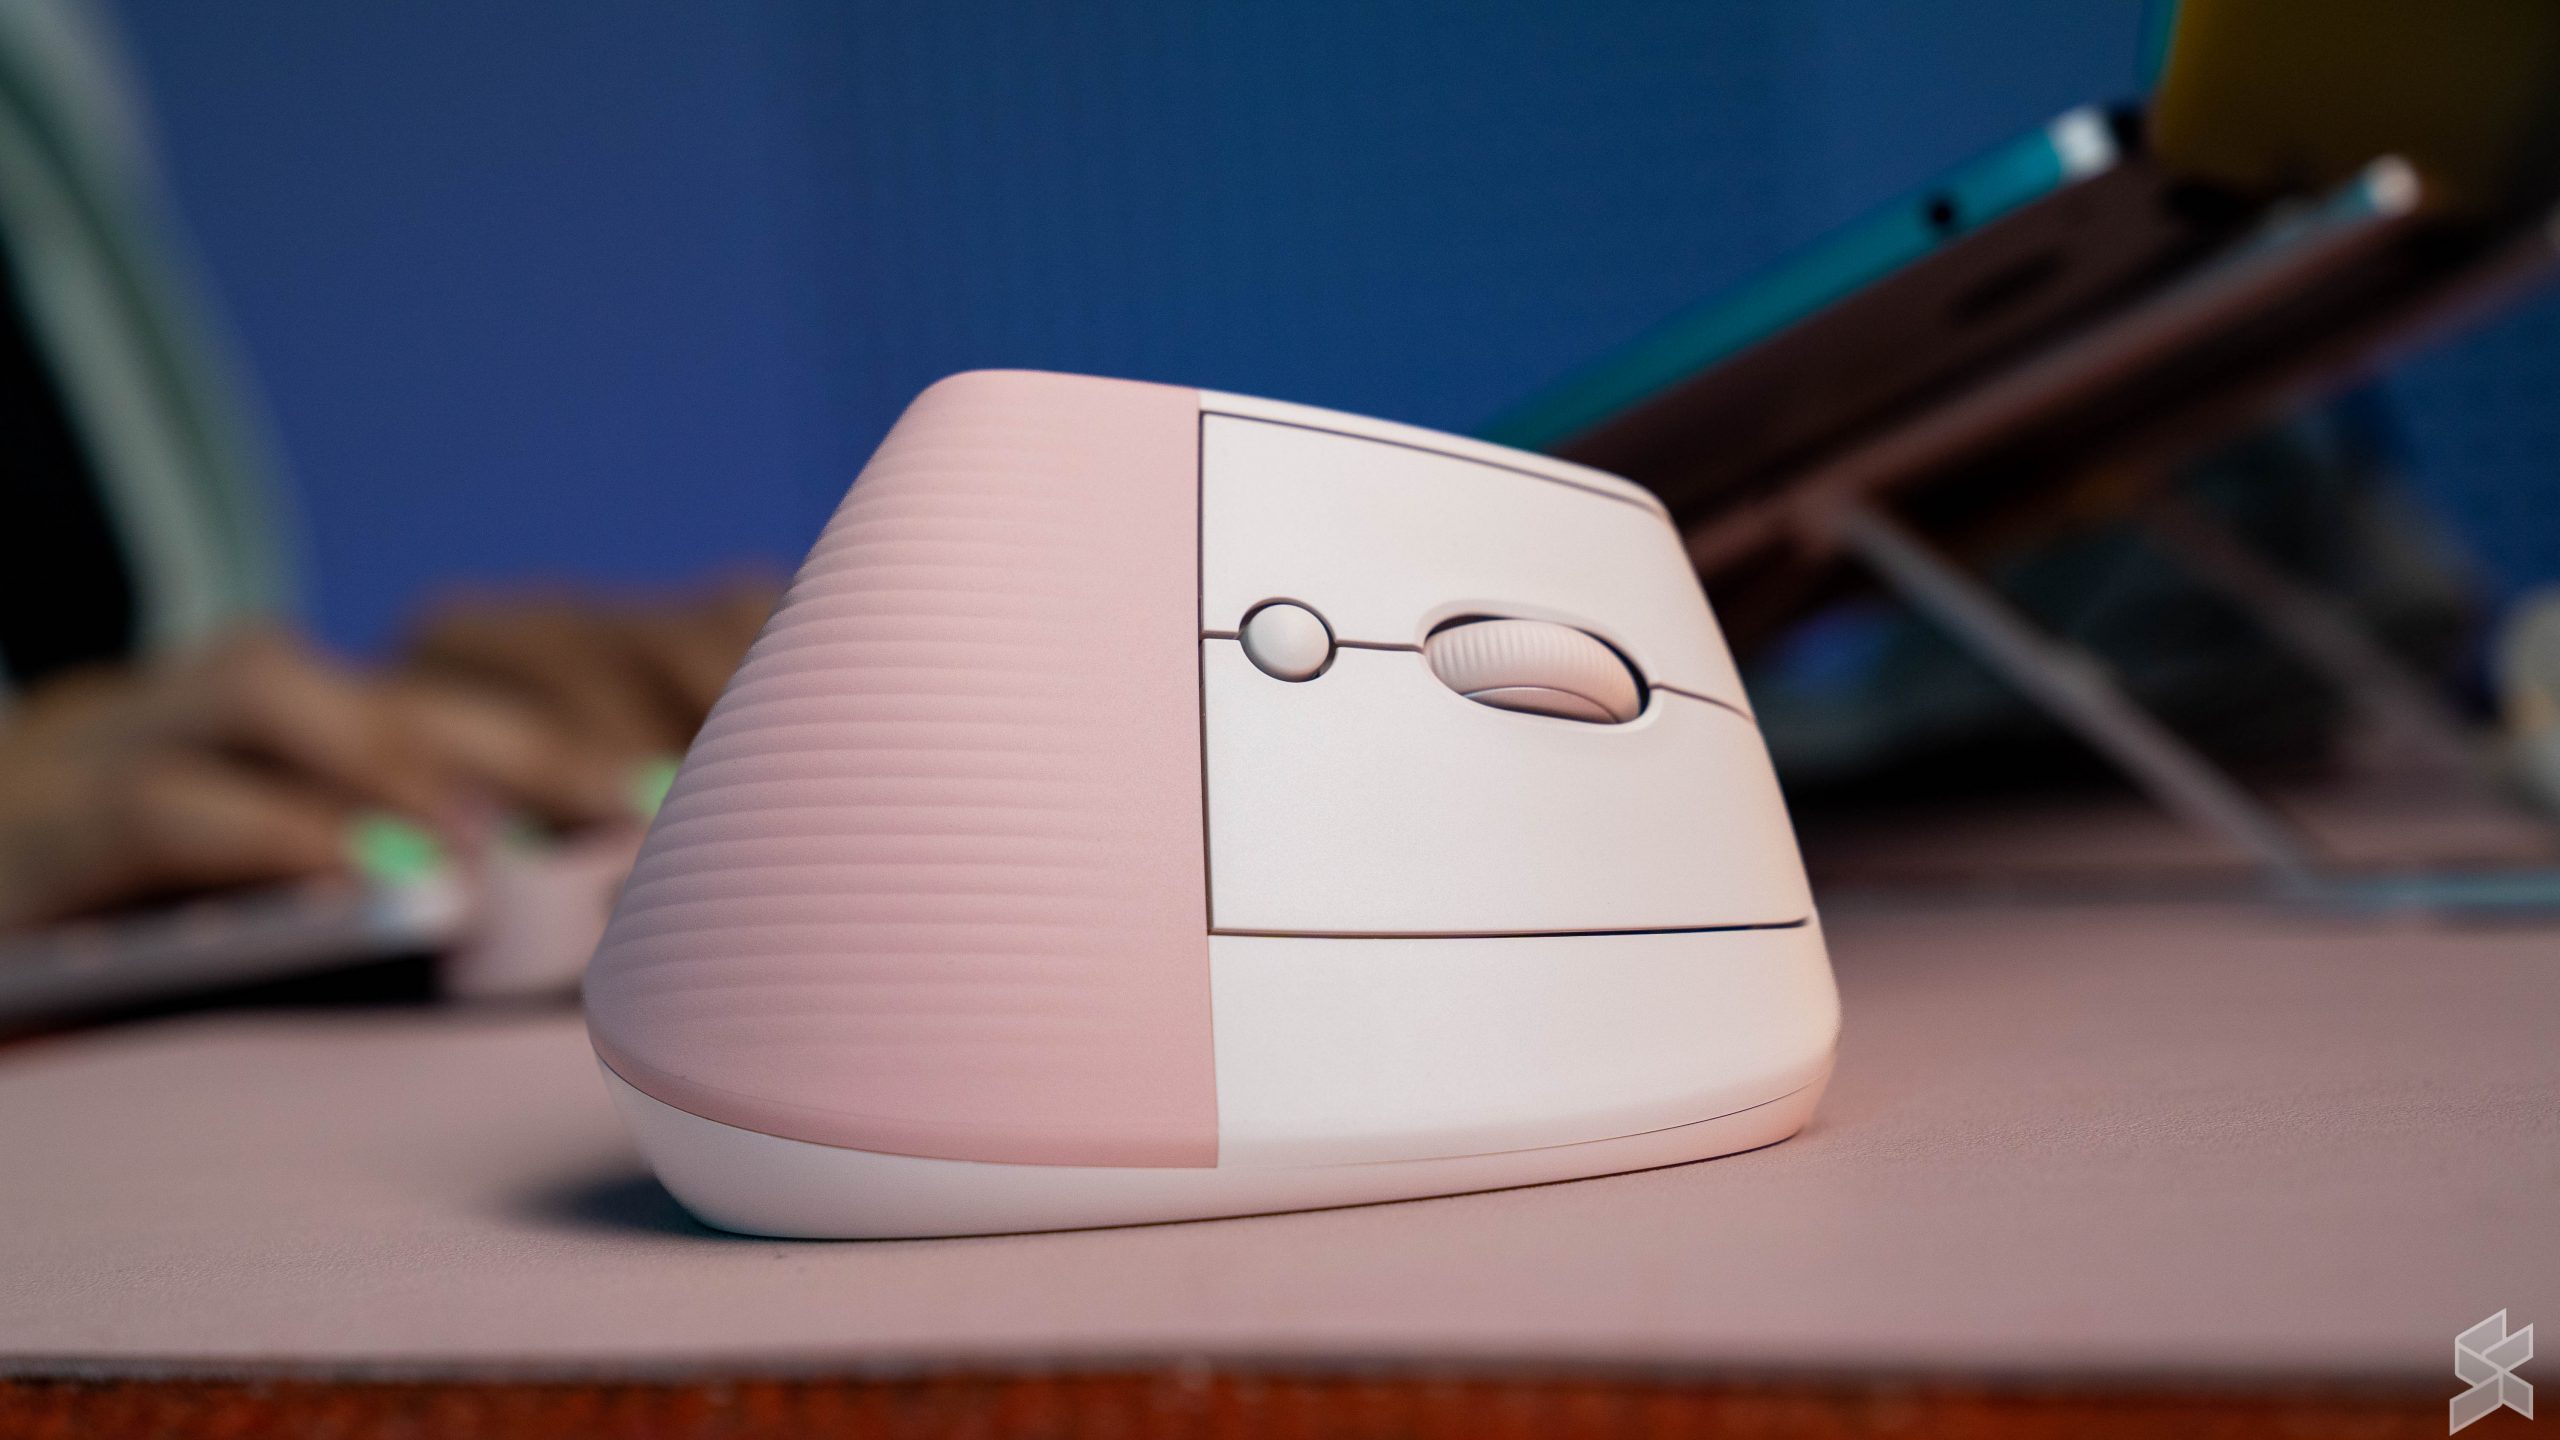 Logitech LIFT vertical mouse (review): Good, but 